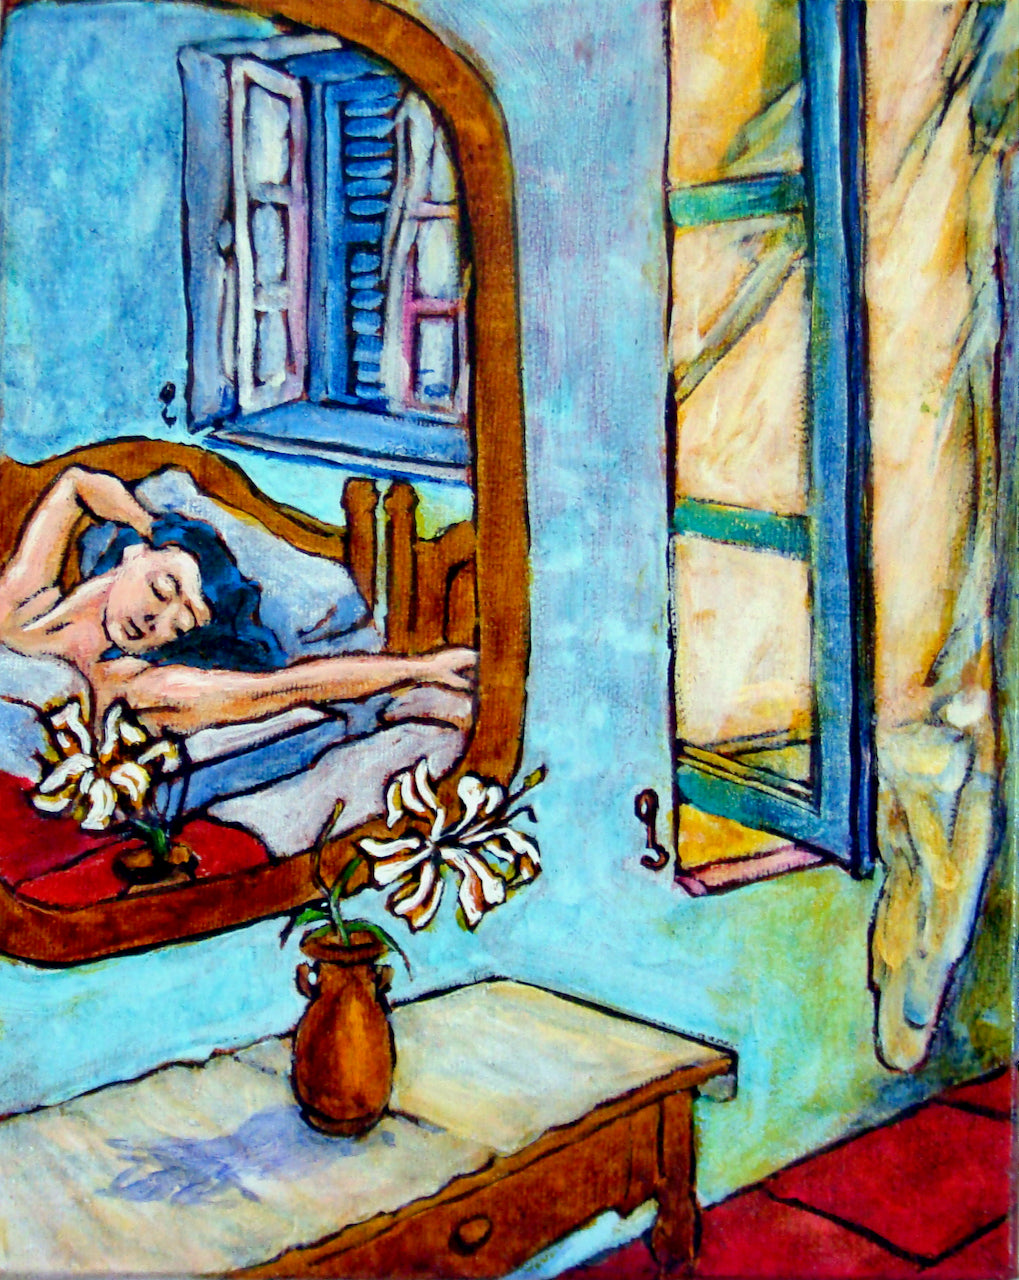 Print “Girl Sleeping” by Marilyn Wells